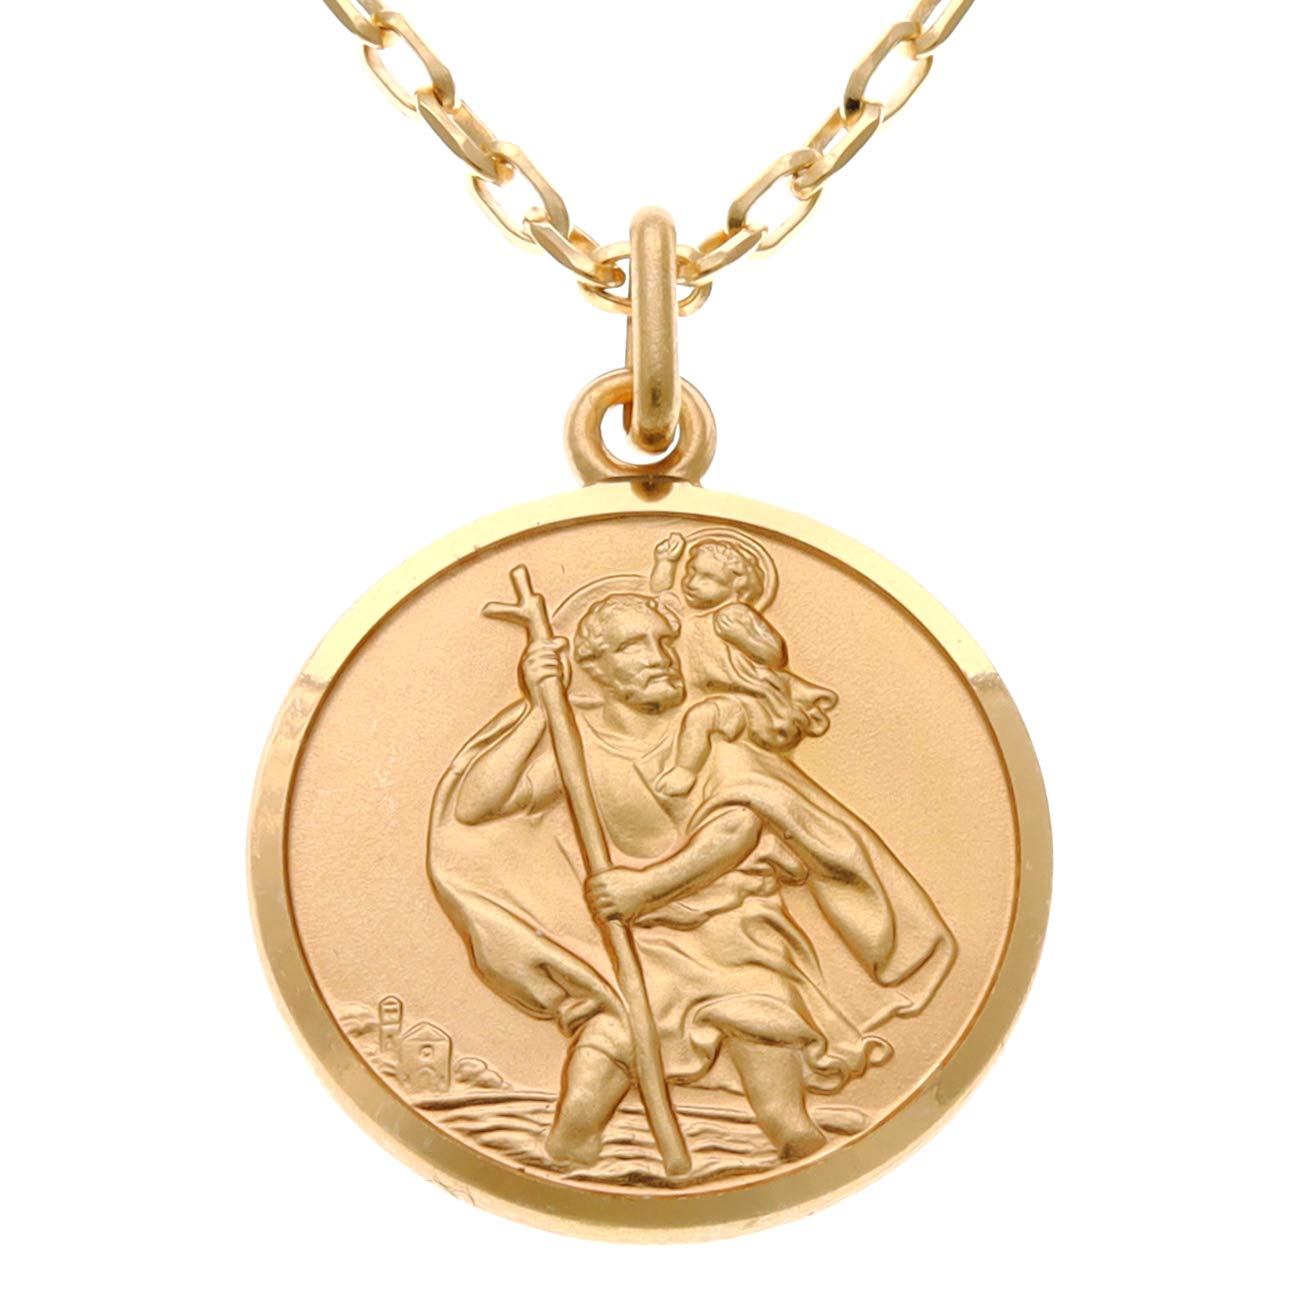 St. Christopher Men's Basketball Necklace - Sterling Silver Medal On 20